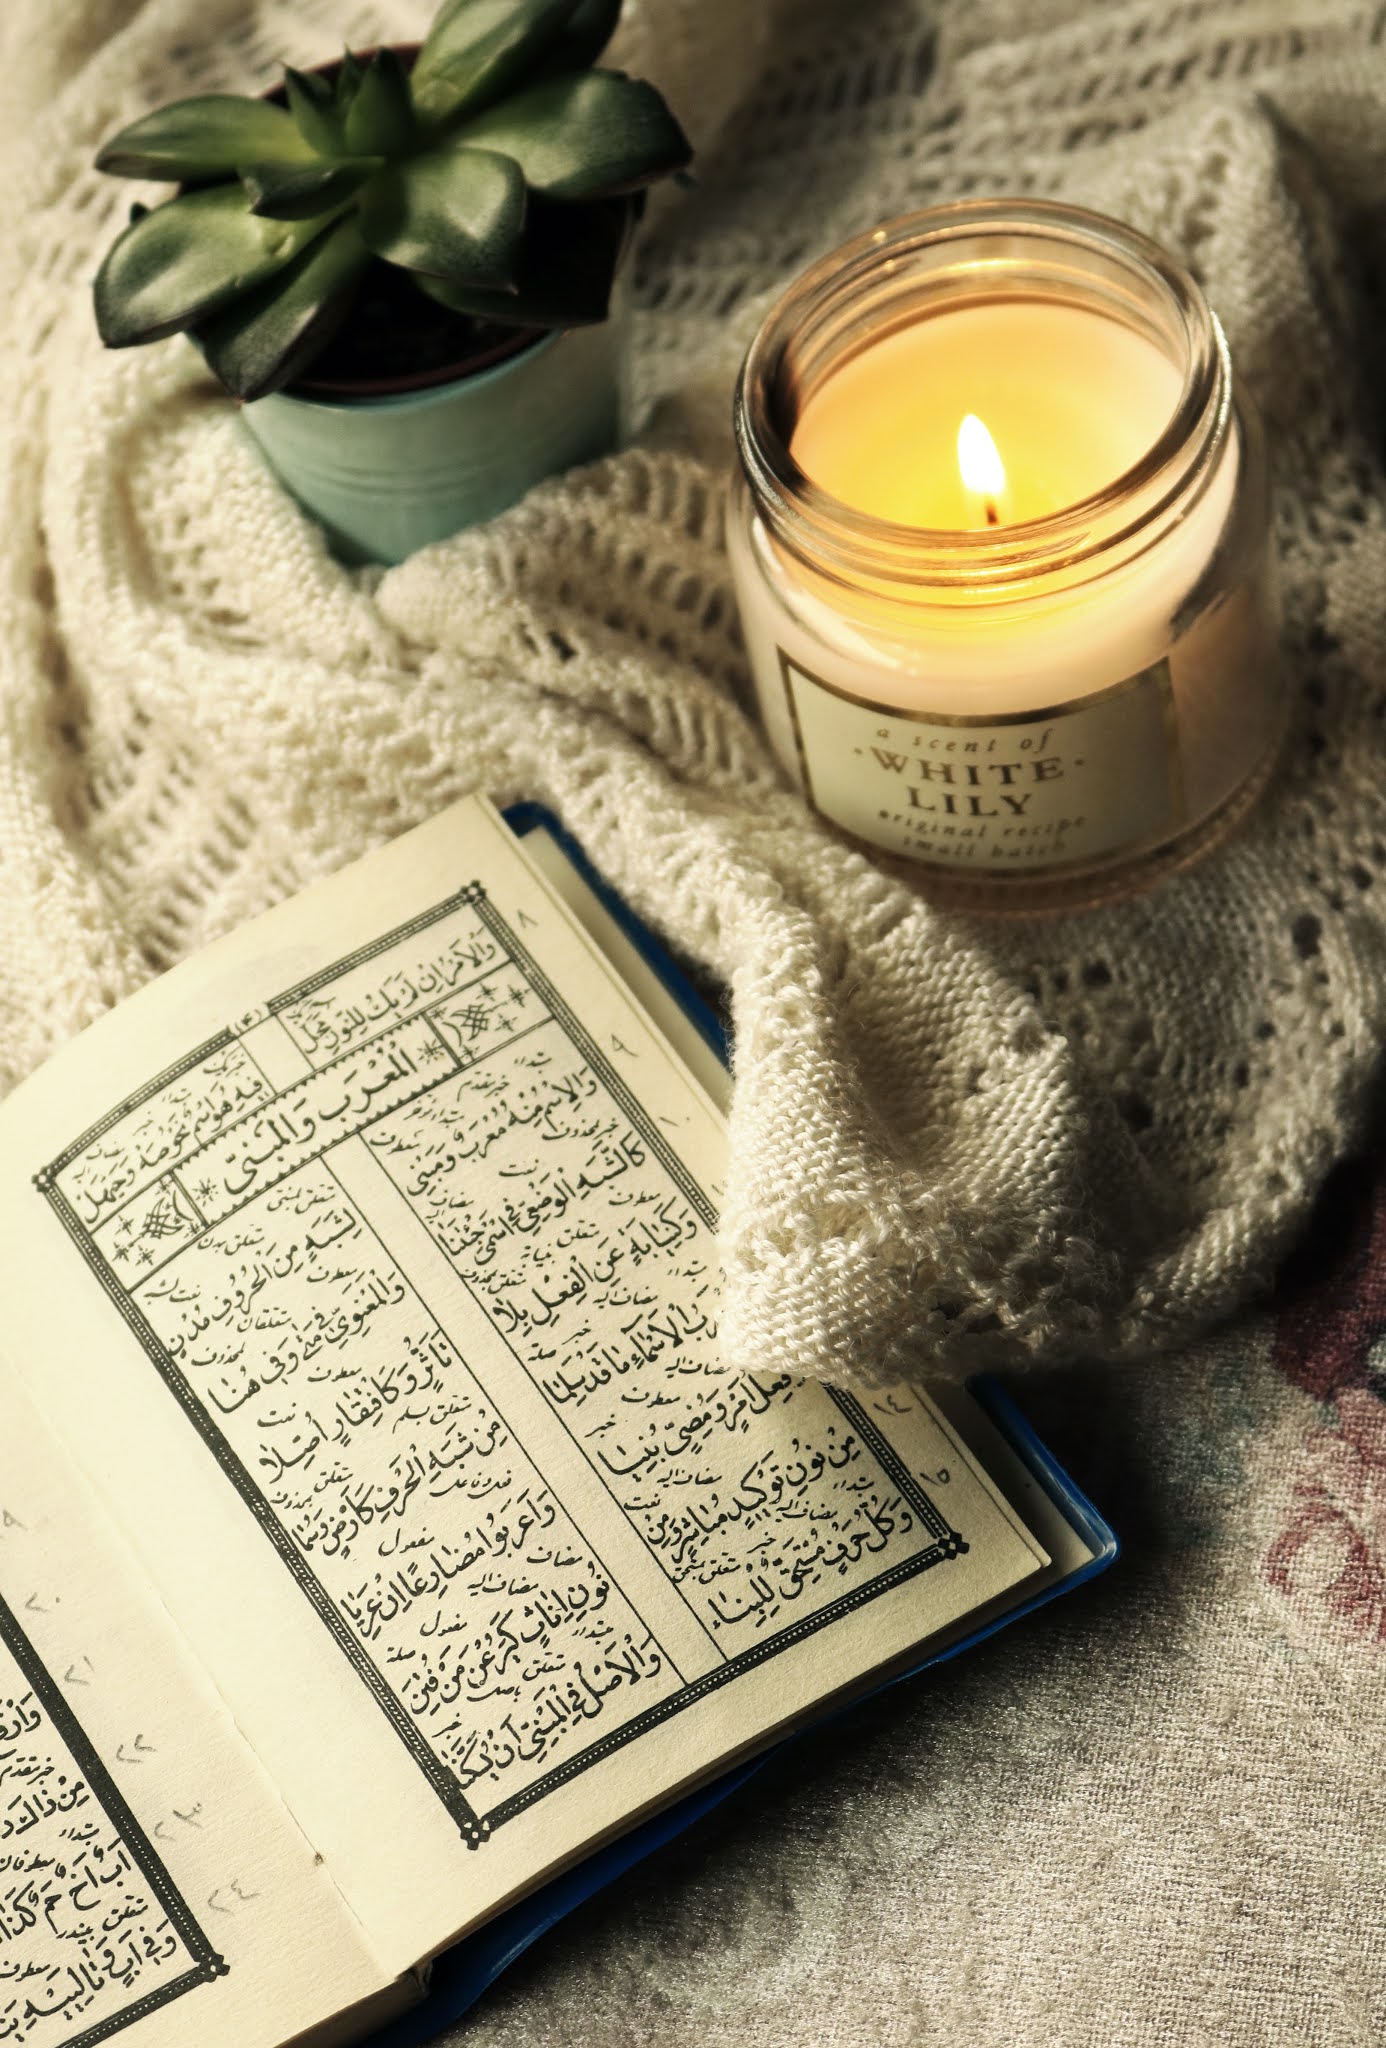 dawat e islami books